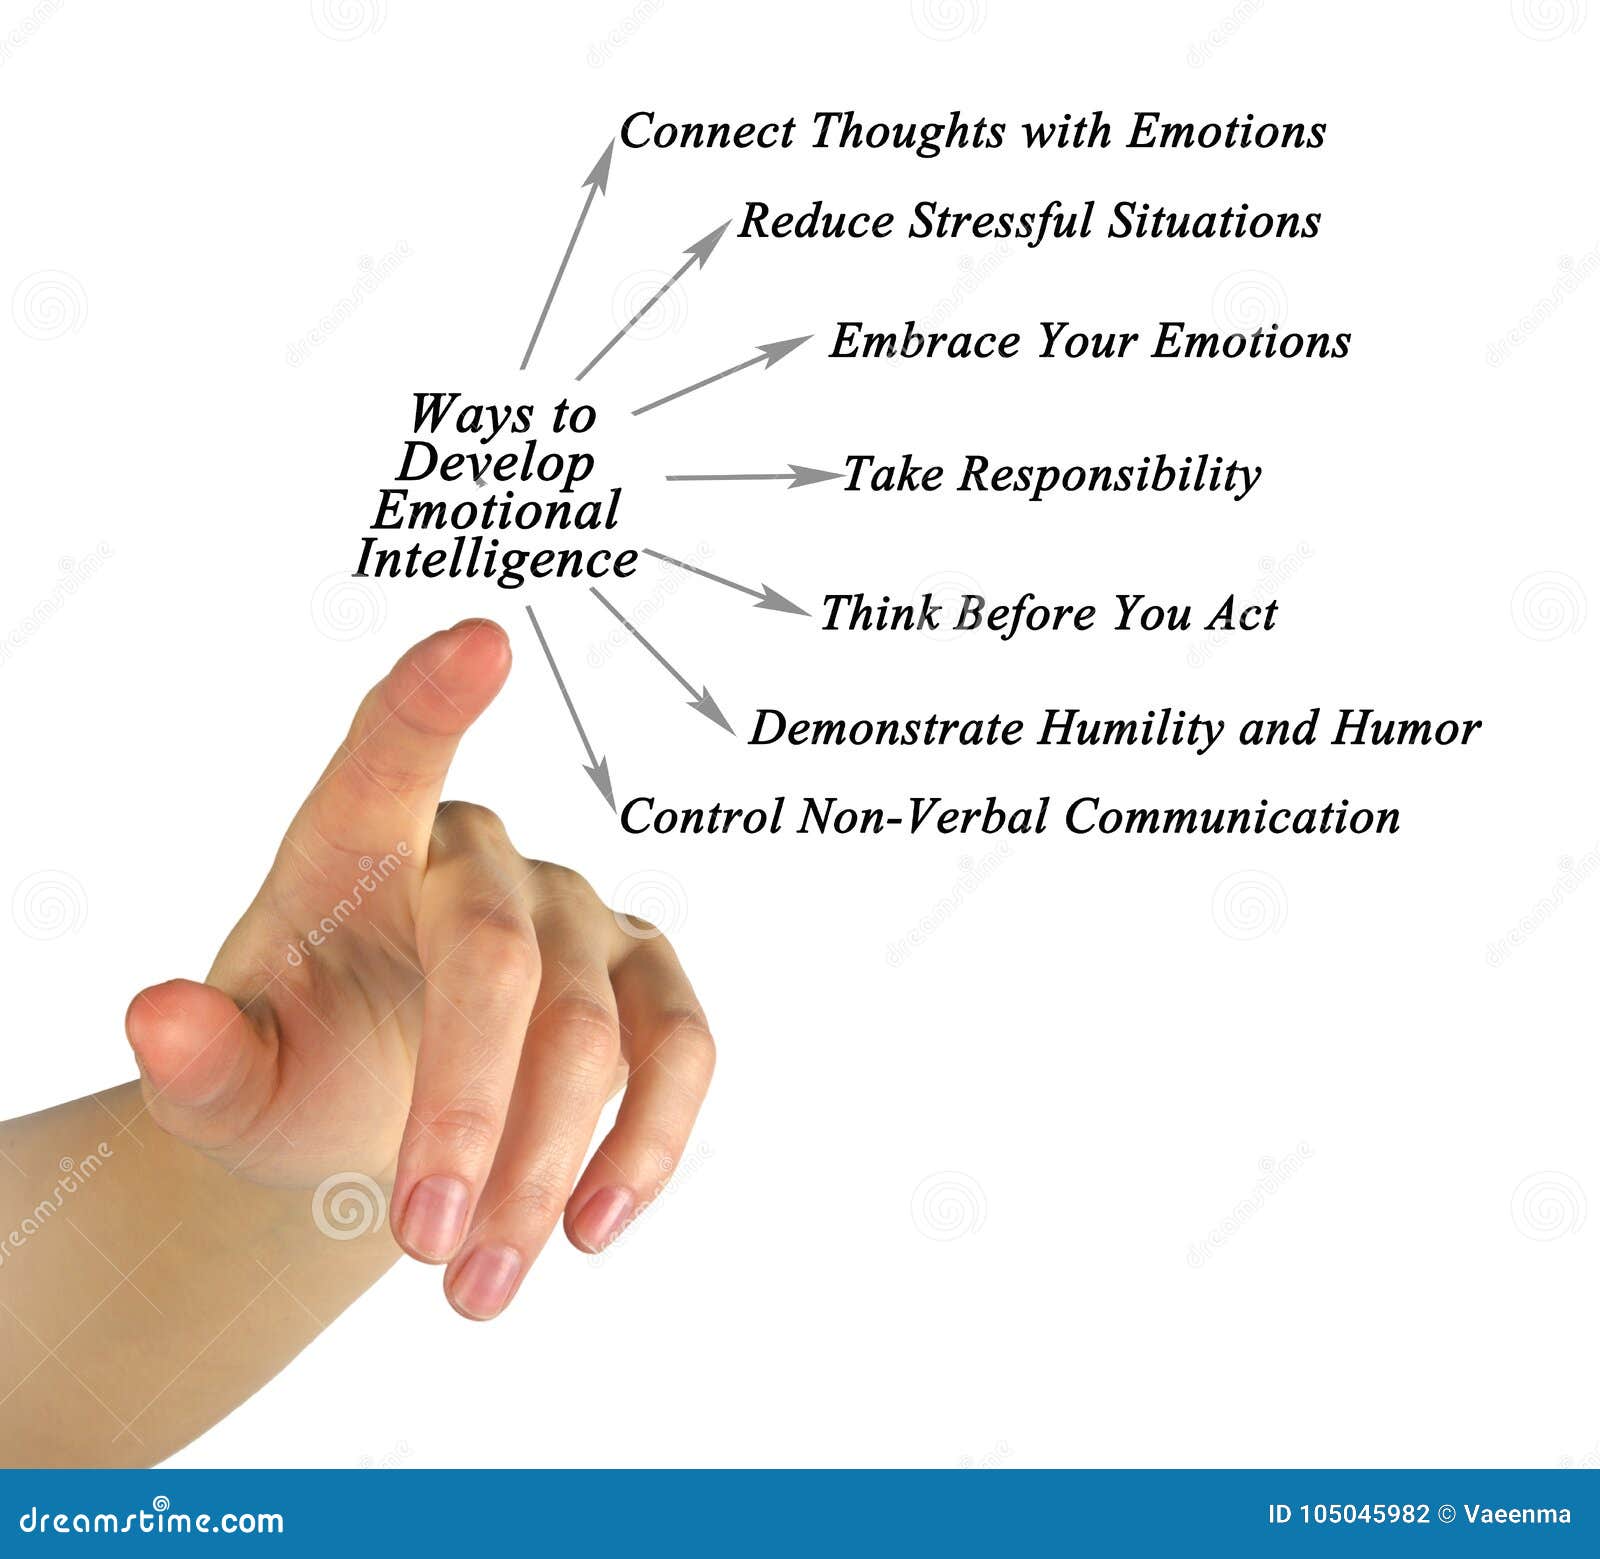 ways to develop emotional intelligence